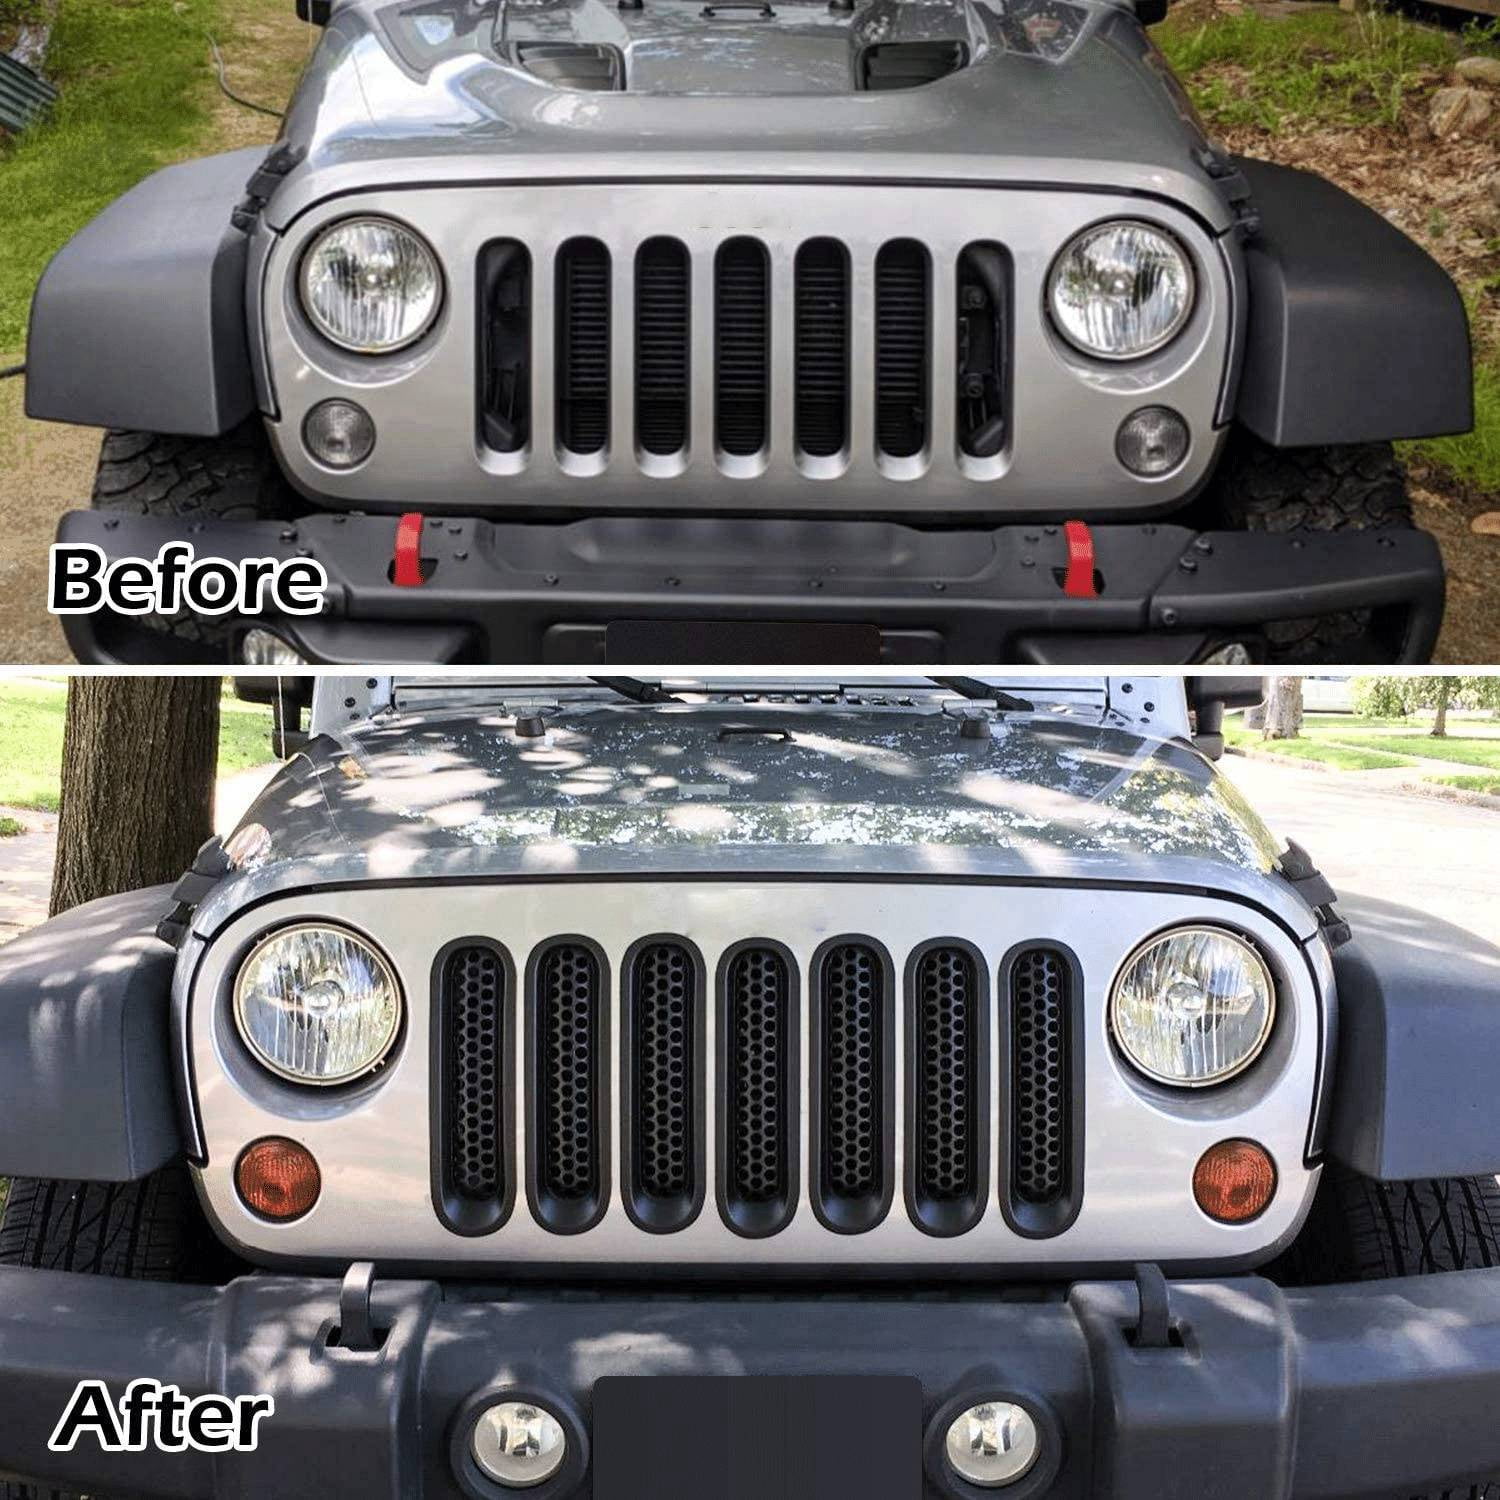 Upgrade Clip-on Grille Front Mesh Grille Inserts for Jeep JK Wrangler 2007-2018